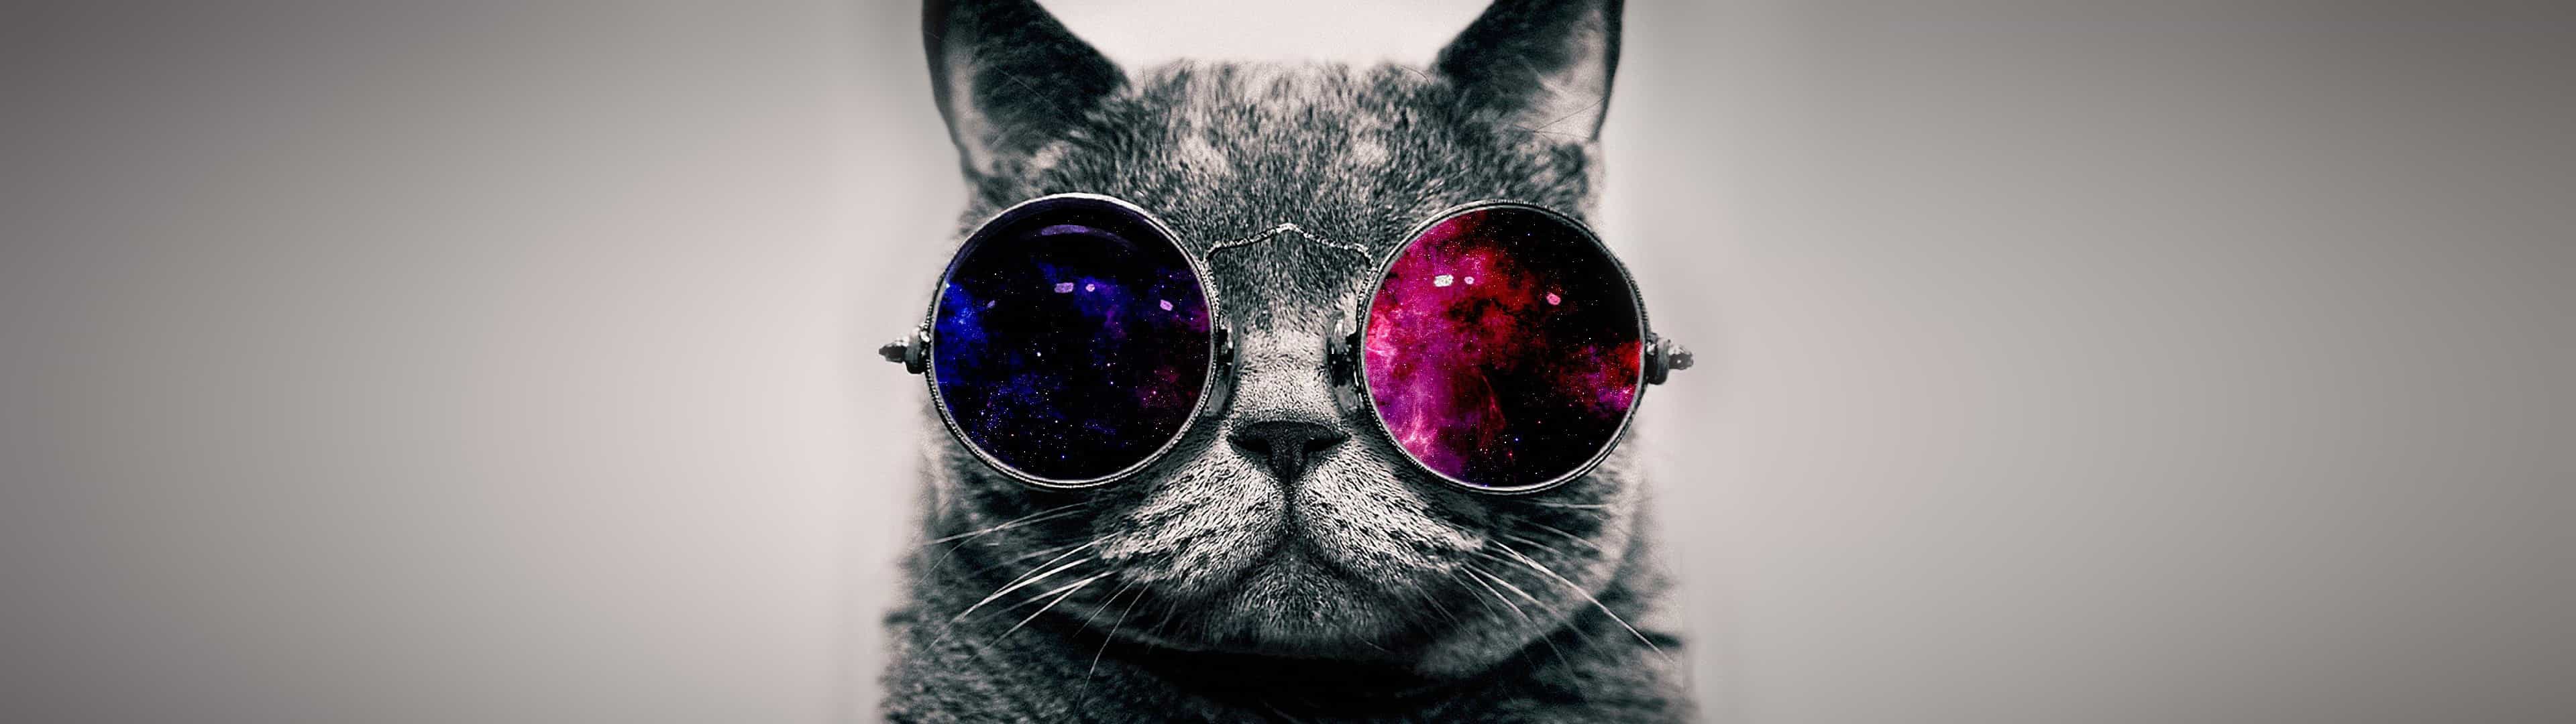 cat with sunglasses wallpaper,eyewear,cat,sunglasses,glasses,felidae